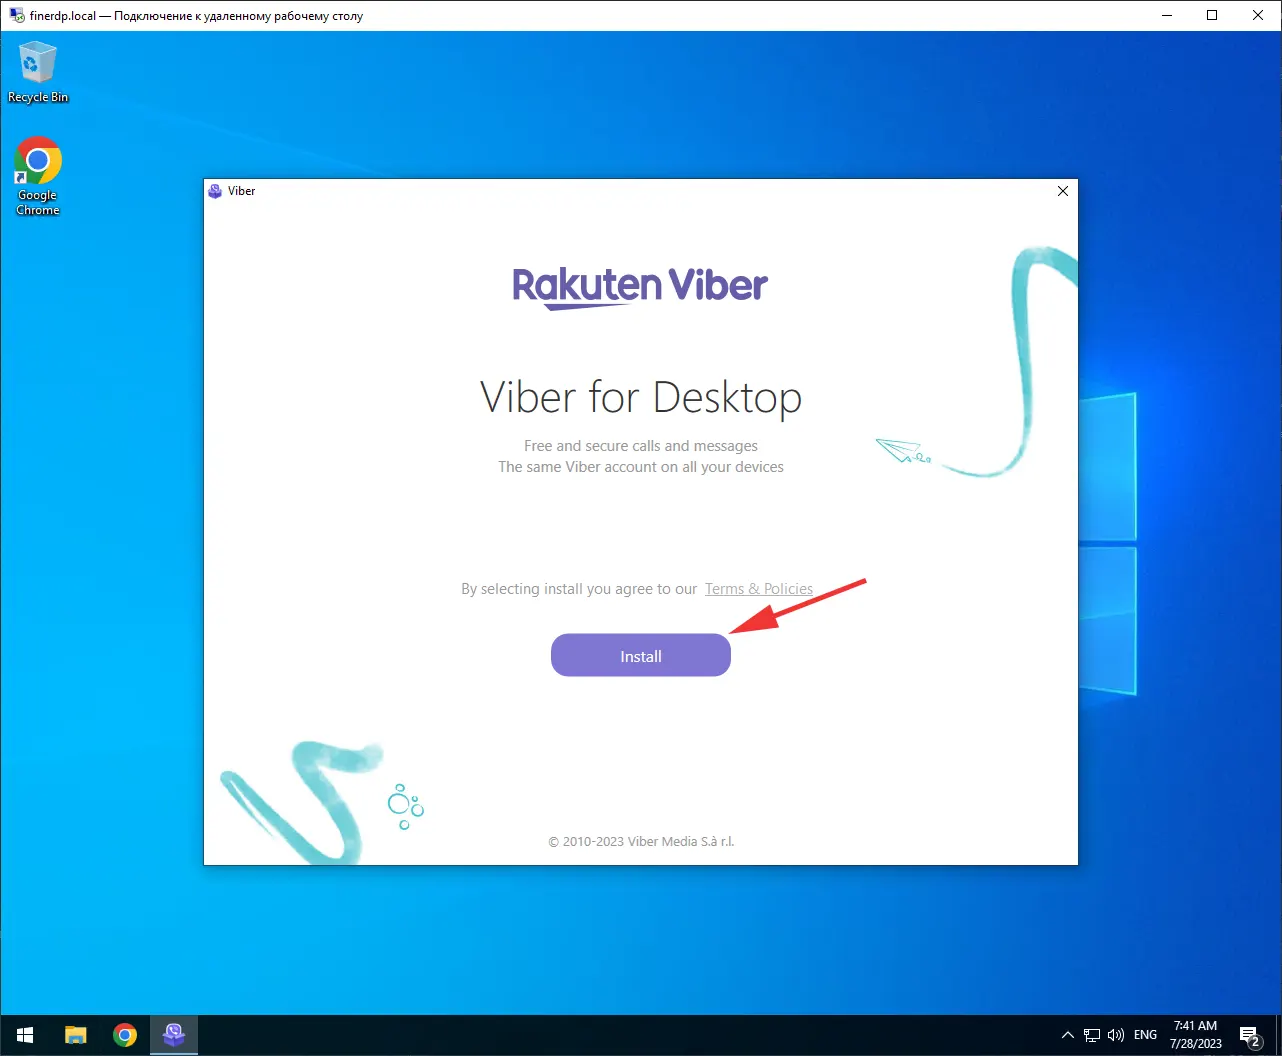 viber on a remote desktop rdp - install 1